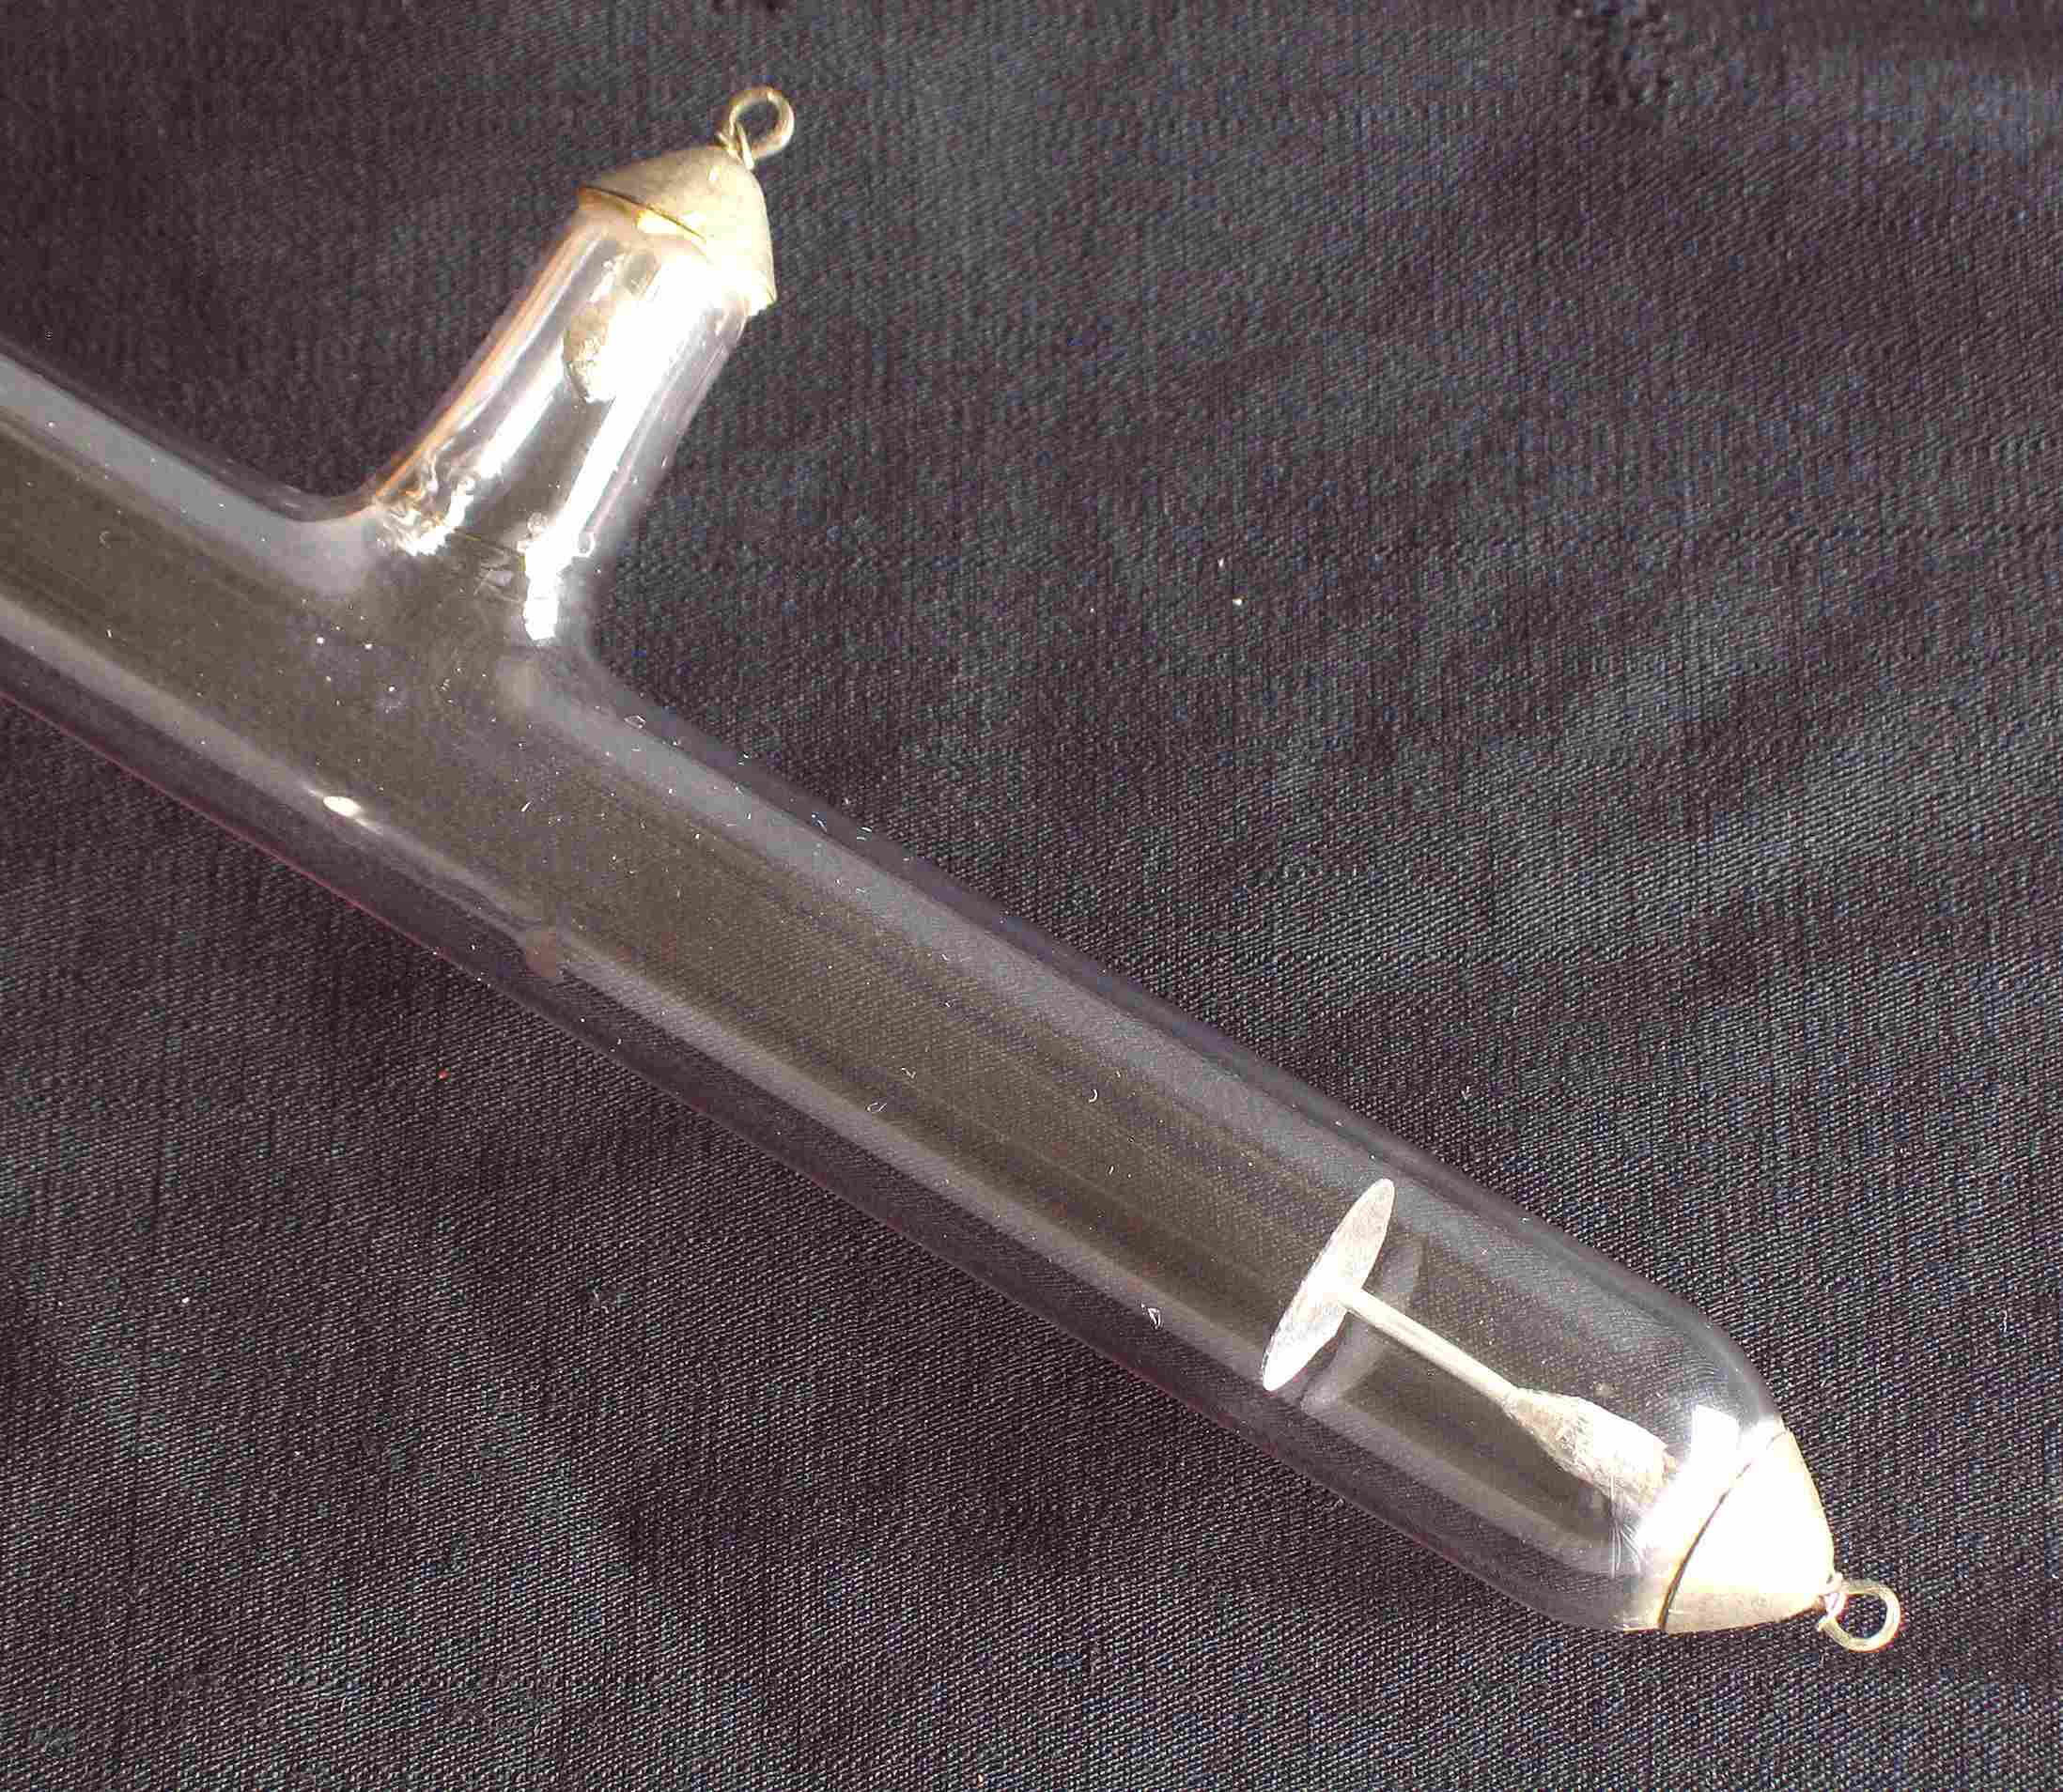 Tube de Ferdinand Braun
(avec écran fluorescent)